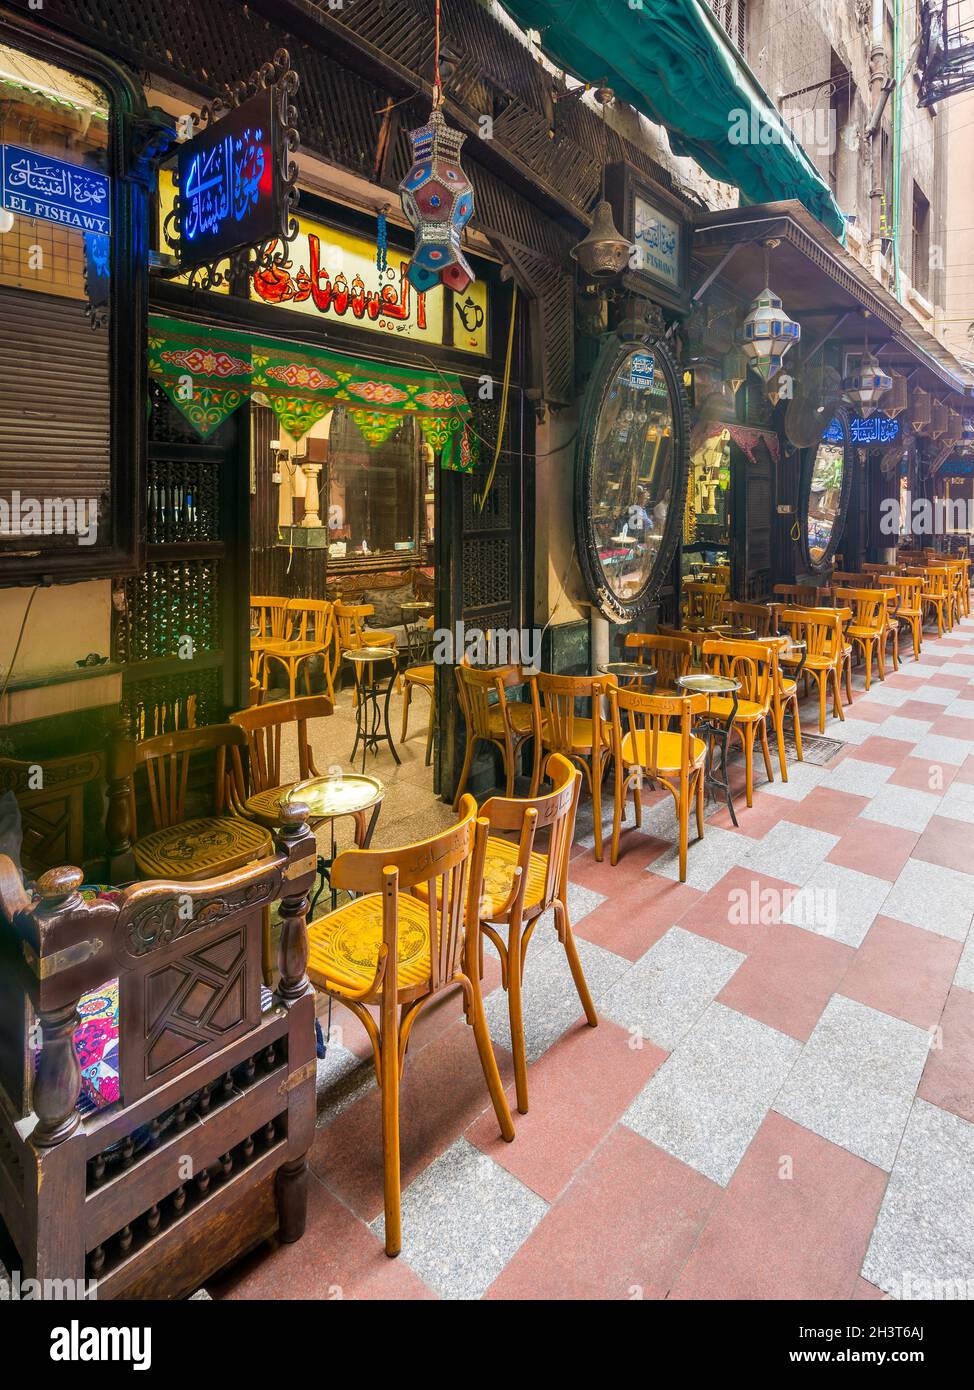 El Cairo, Egipto - 25 2021 de septiembre: Antiguo famoso café, El Fishawi, situado en la histórica era de Mamluk Khan al-Khalili famoso bazar y souq Foto de stock